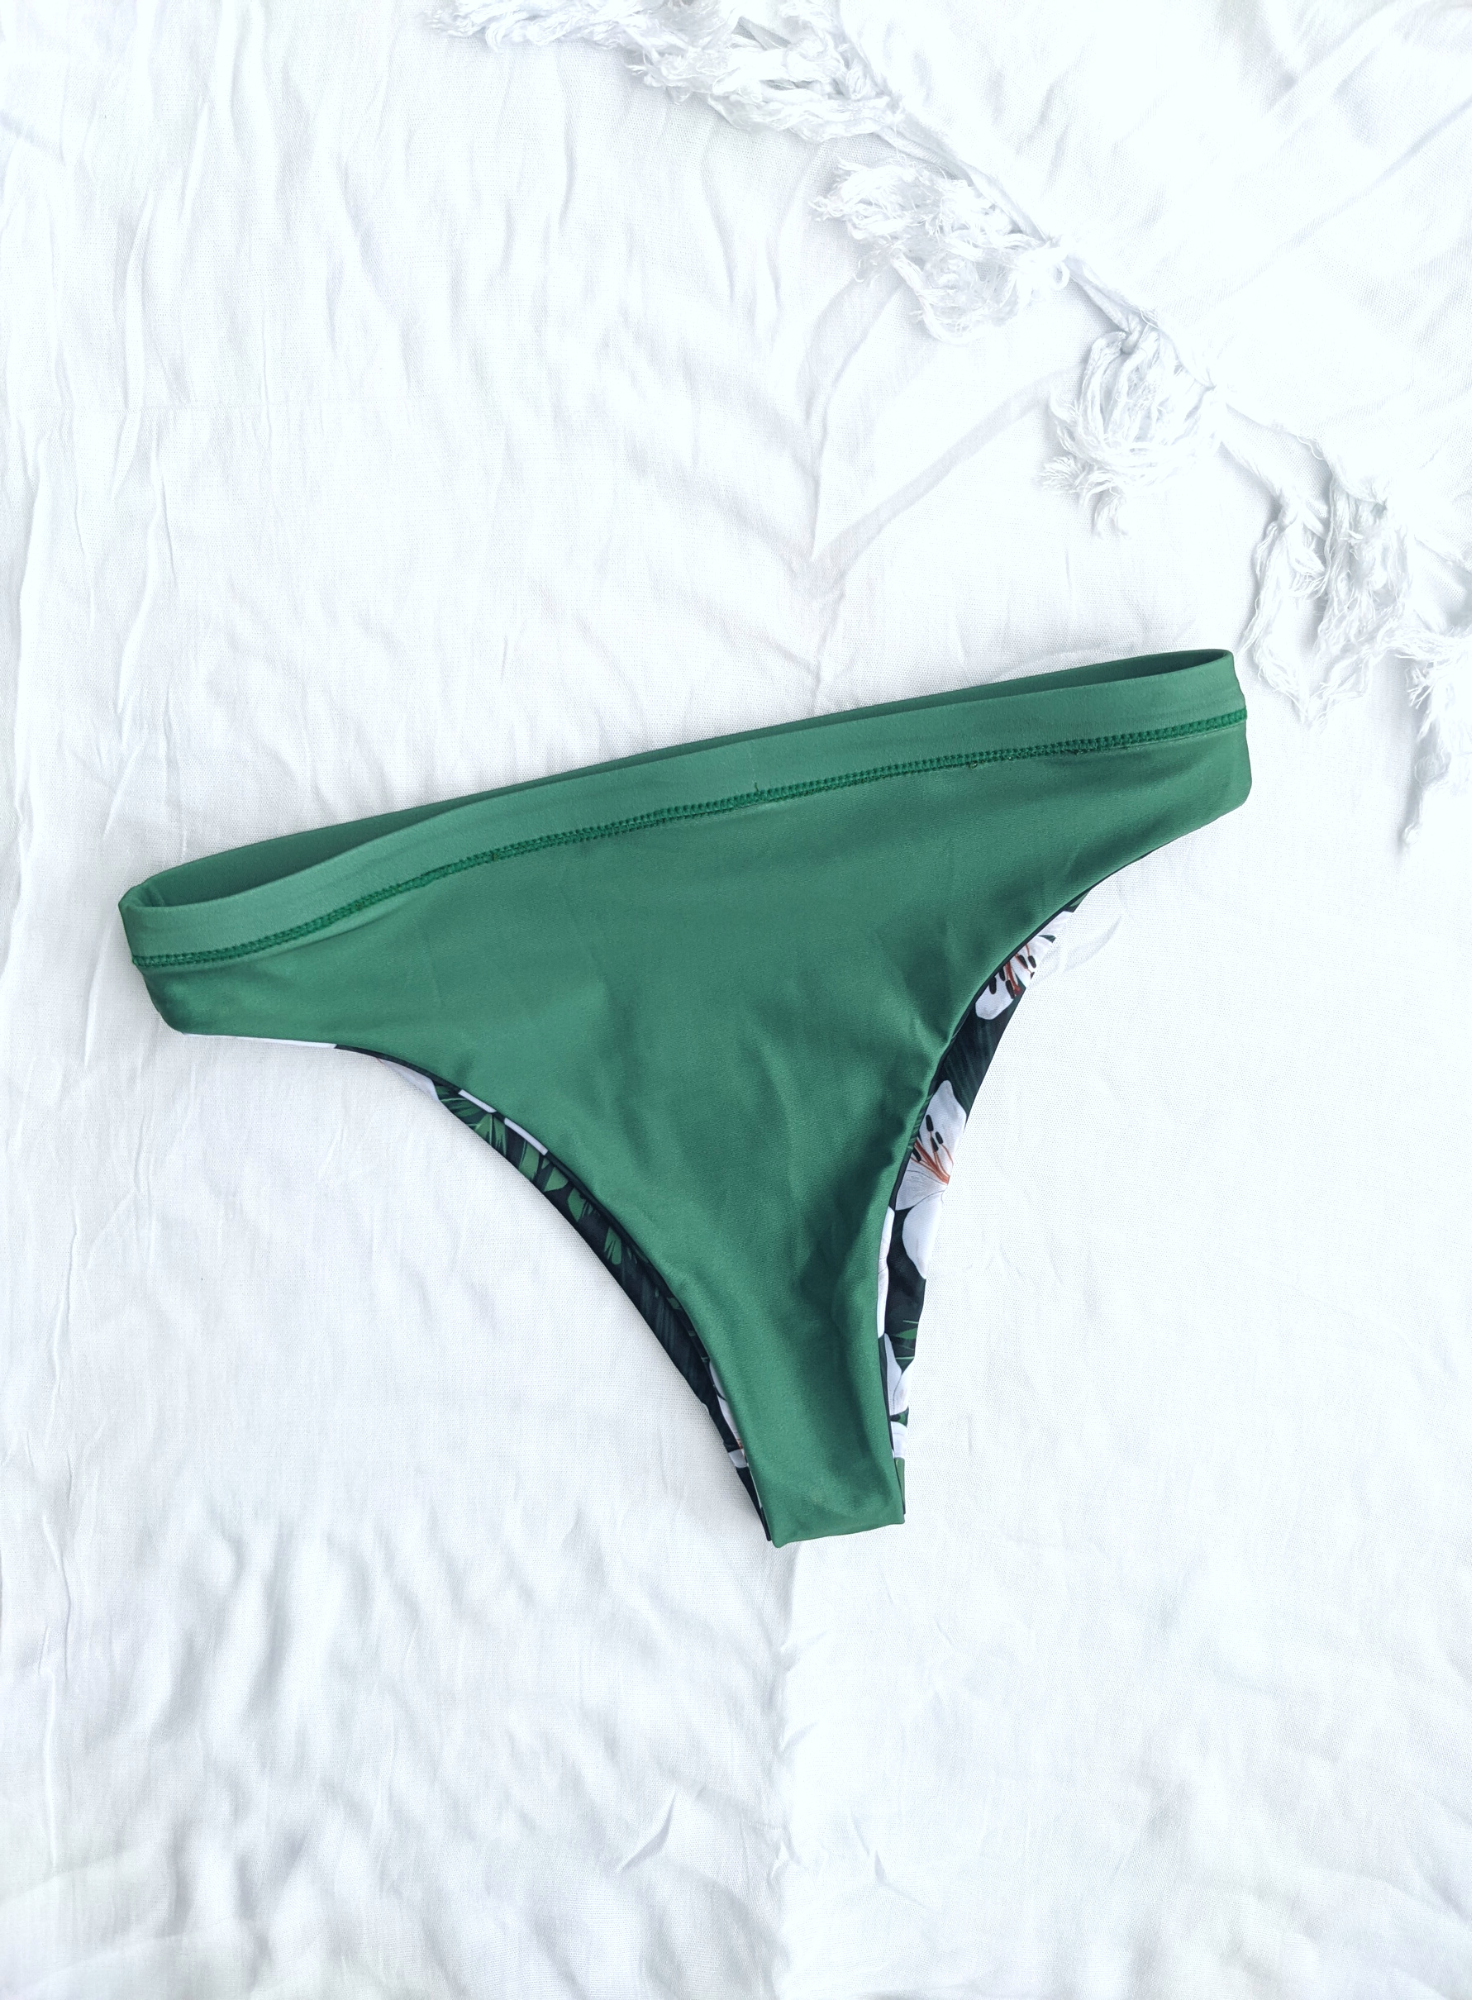 Sustainable swimwear reversible bikini green floral cheeky bikini bottom flat lay green side